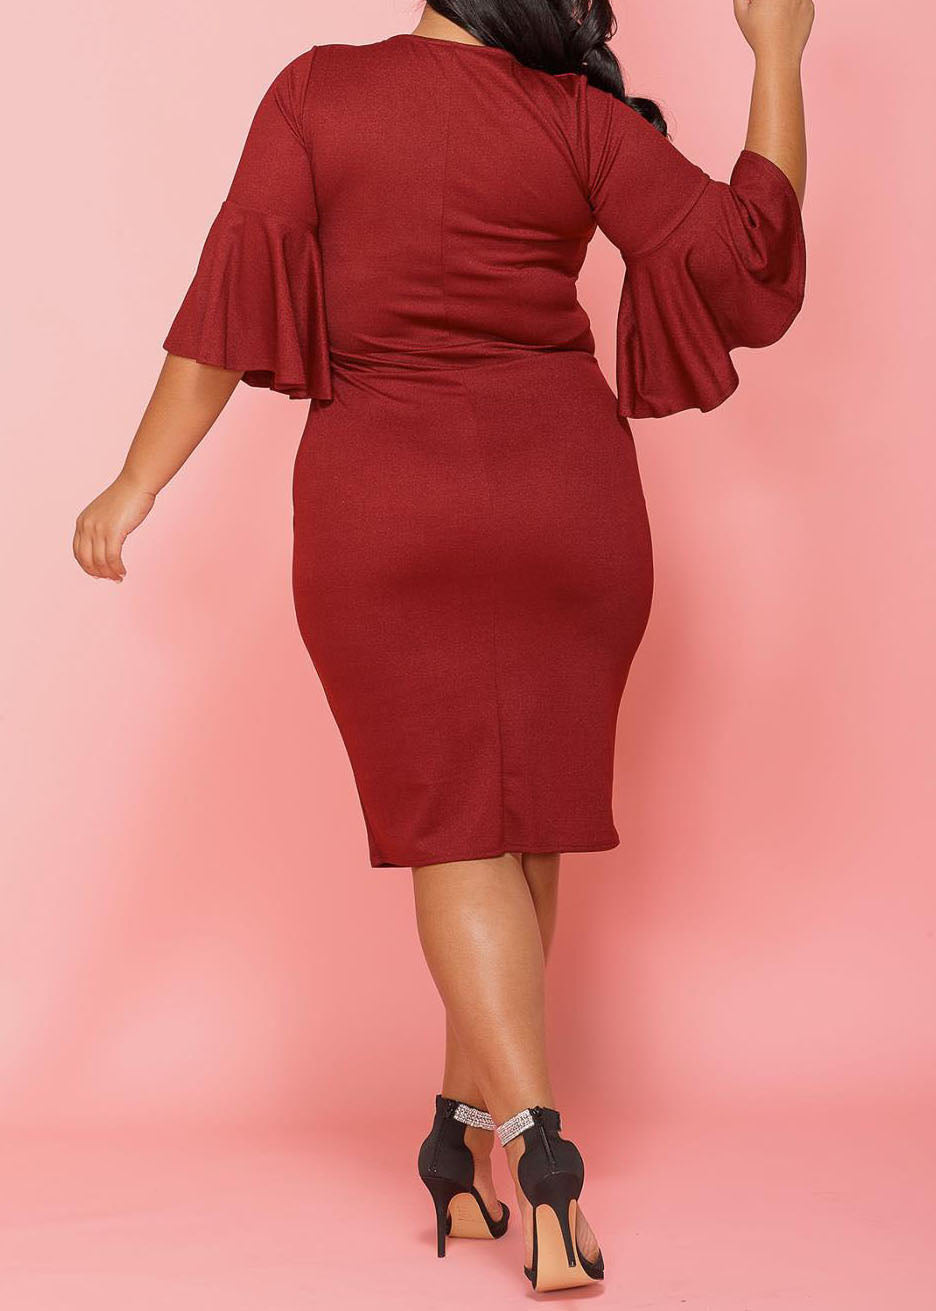 HI Curvy Plus Size Women V-Neck Bell Sleeve Cocktail Dress